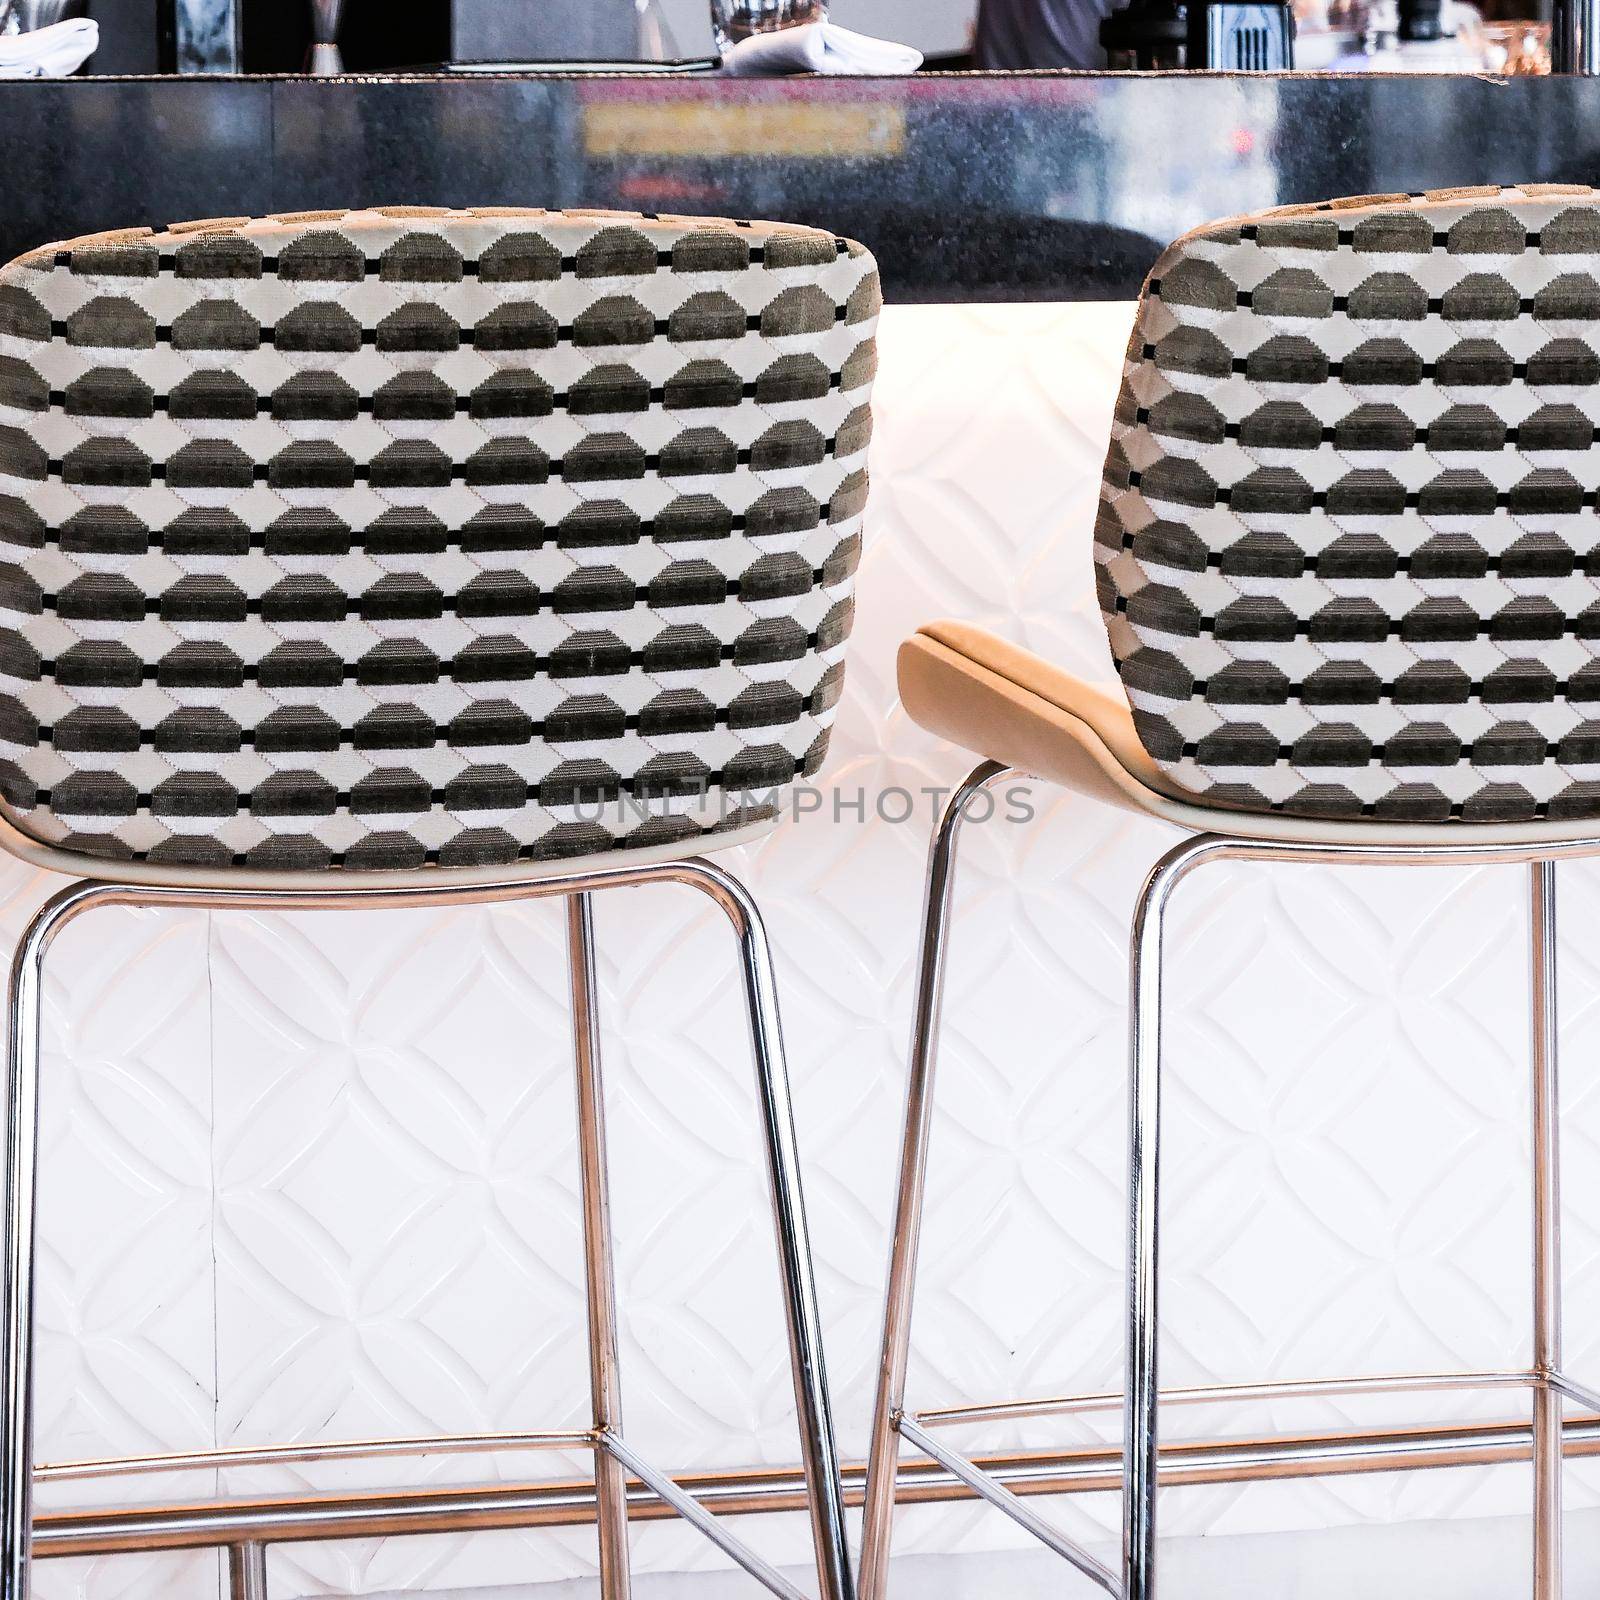 Interior design, furniture decor and nightlife concept - Modern bar stool in a luxury restaurant